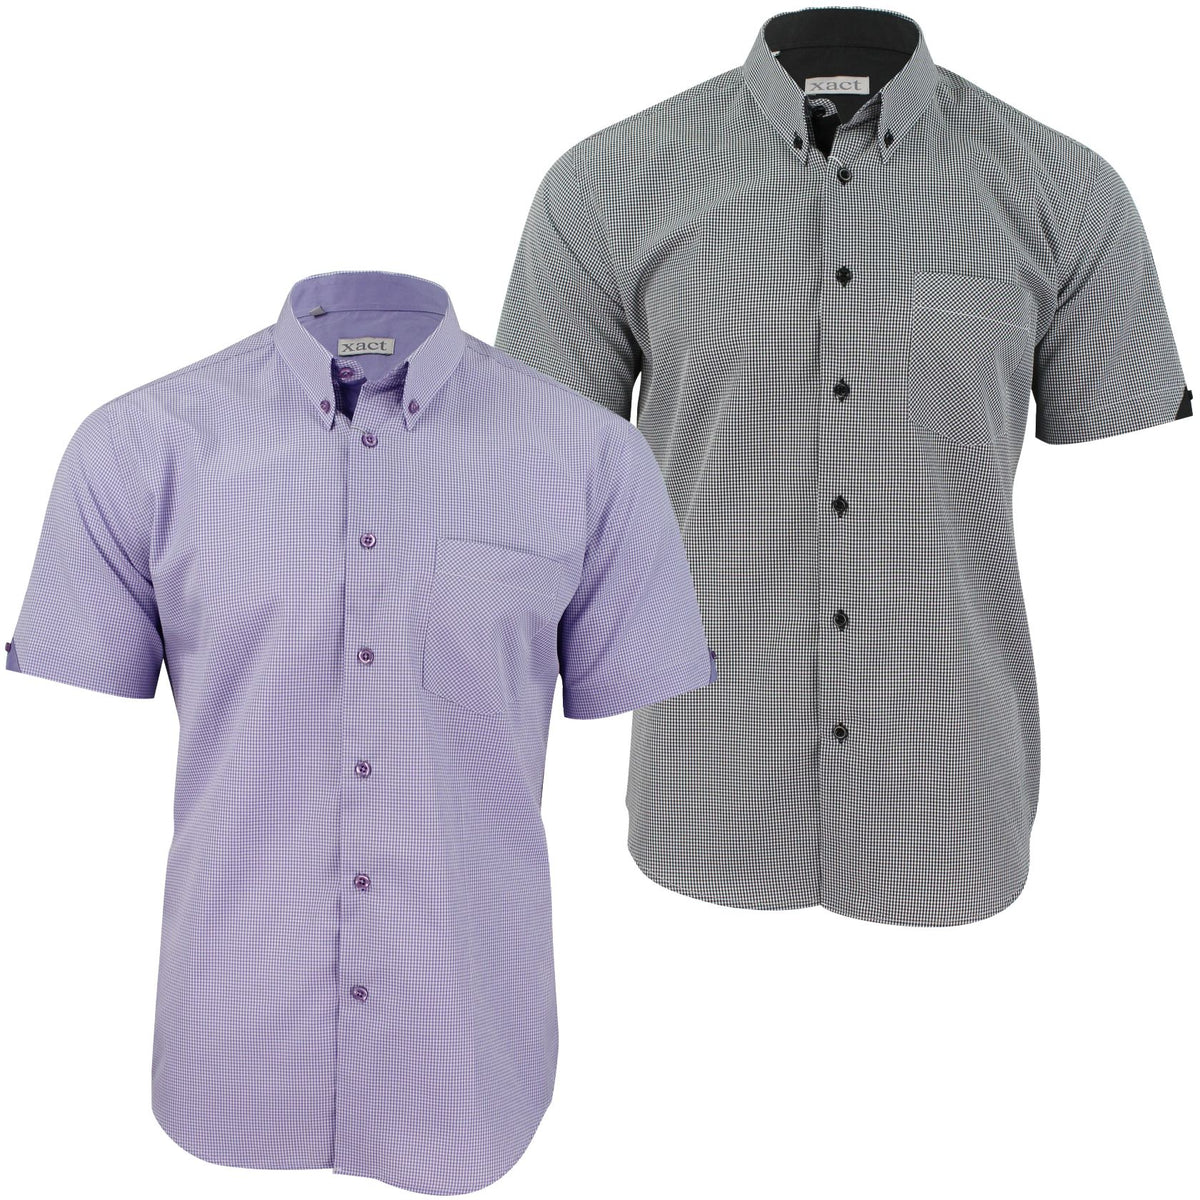 Mens Short Sleeved Shirt by Xact Clothing Micro Gingham Check, 01, 1510114